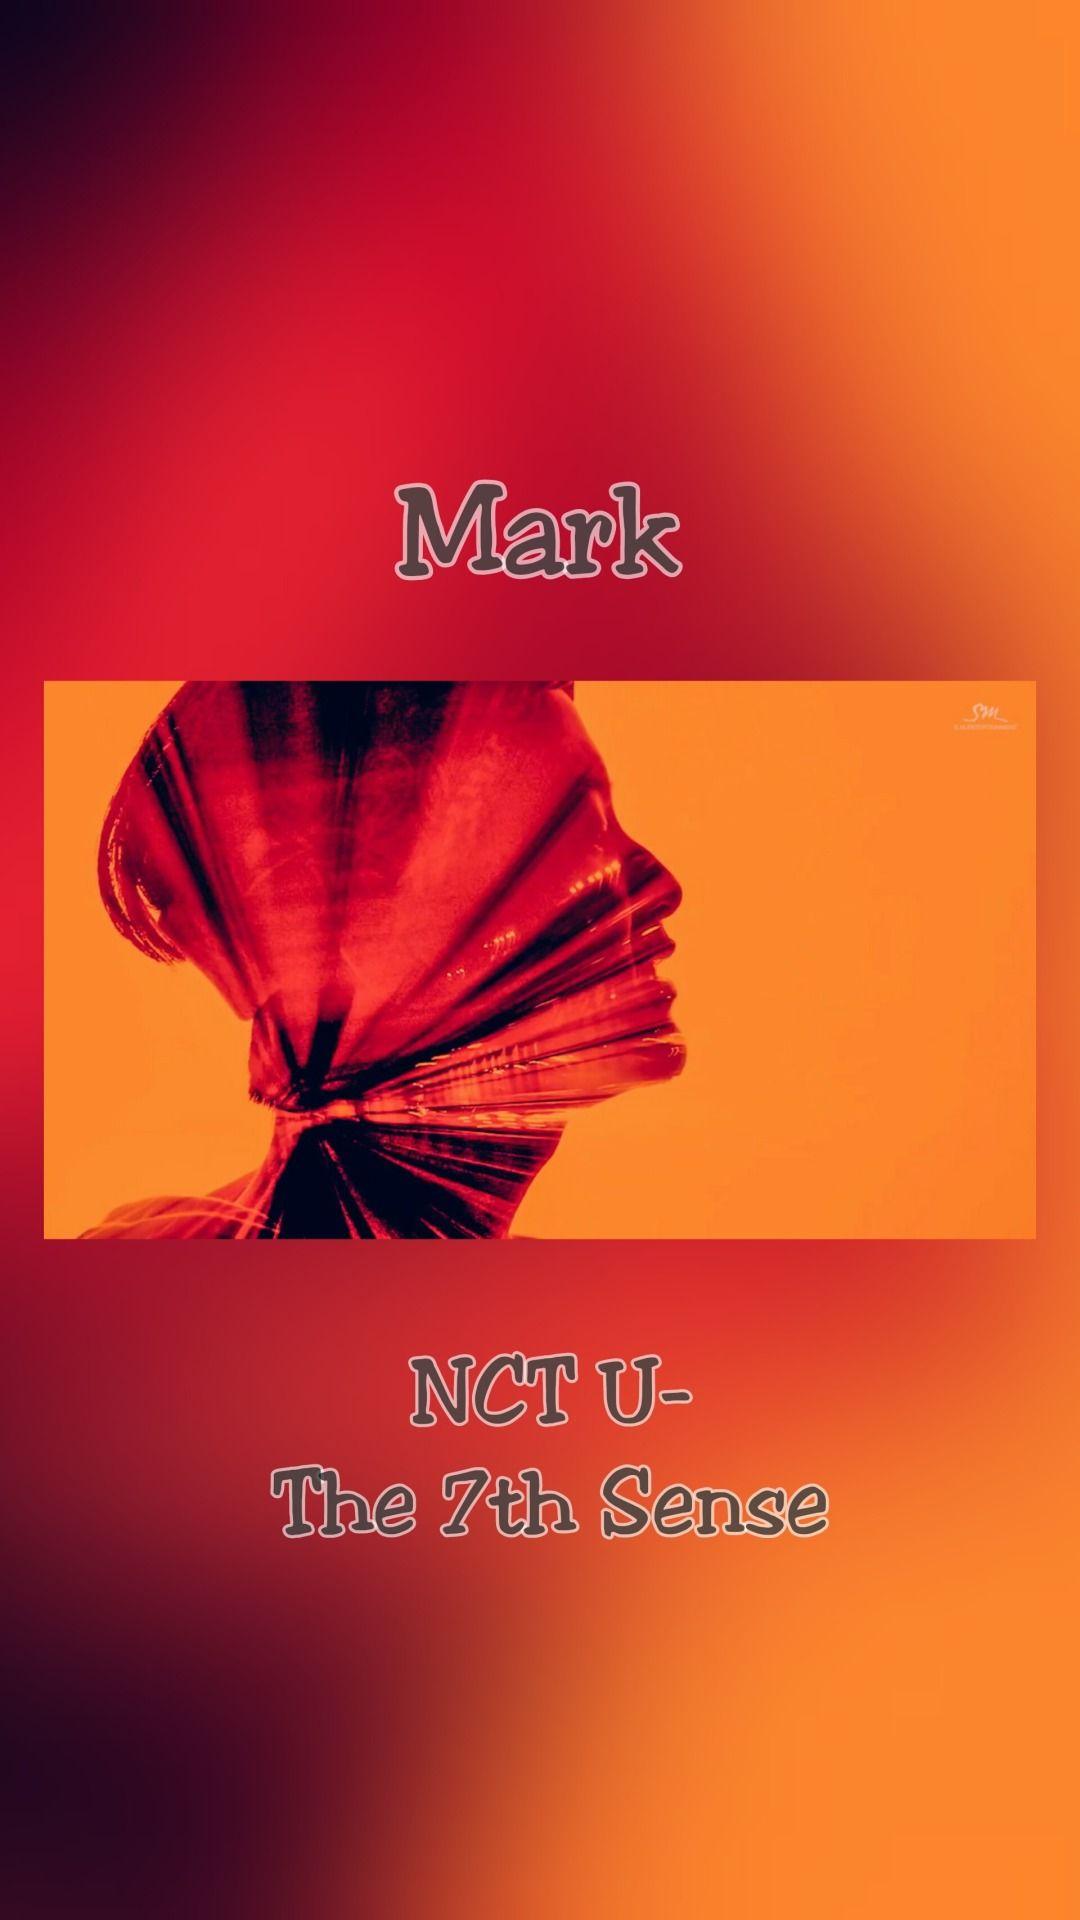 NCT U- The 7th Sense Wallpaper Lock Screens